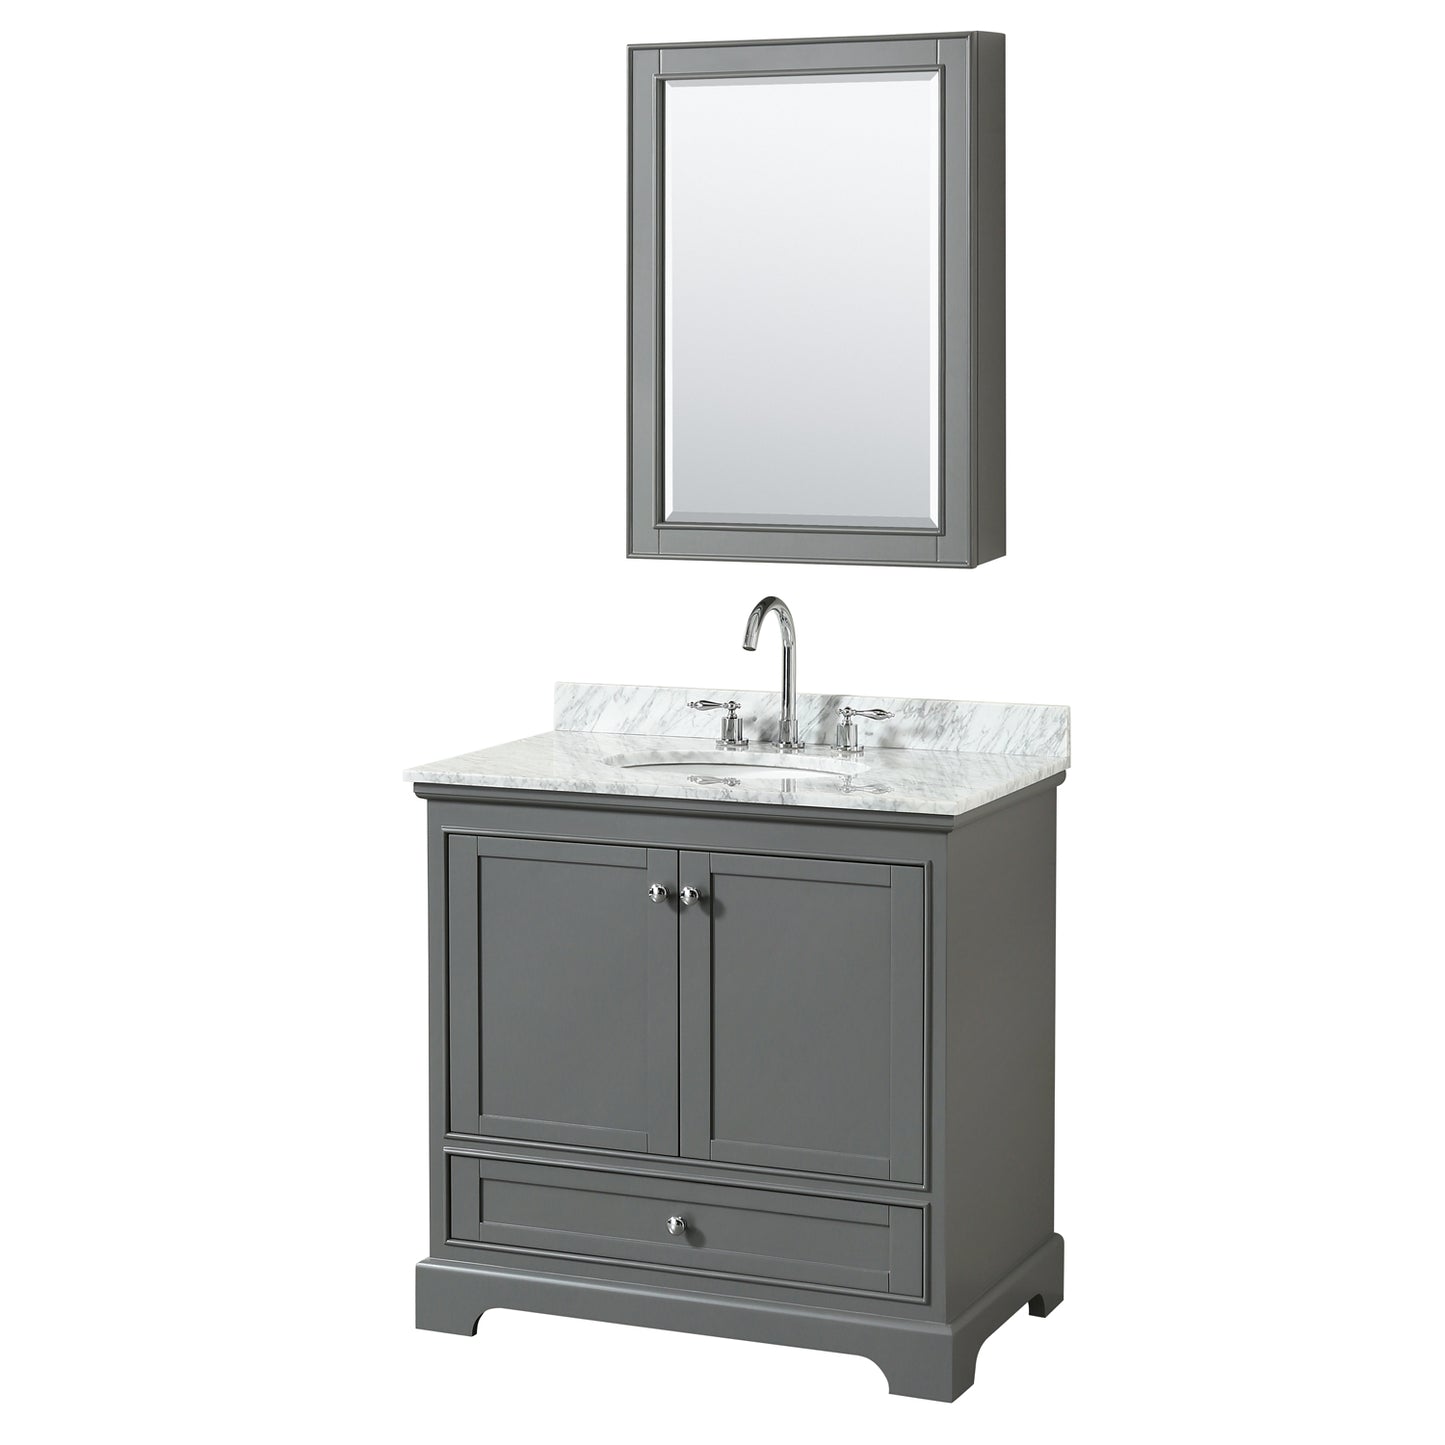 36 Inch Single Bathroom Vanity, White Carrara Marble Countertop, Undermount Oval Sink, and Medicine Cabinet - Luxe Bathroom Vanities Luxury Bathroom Fixtures Bathroom Furniture